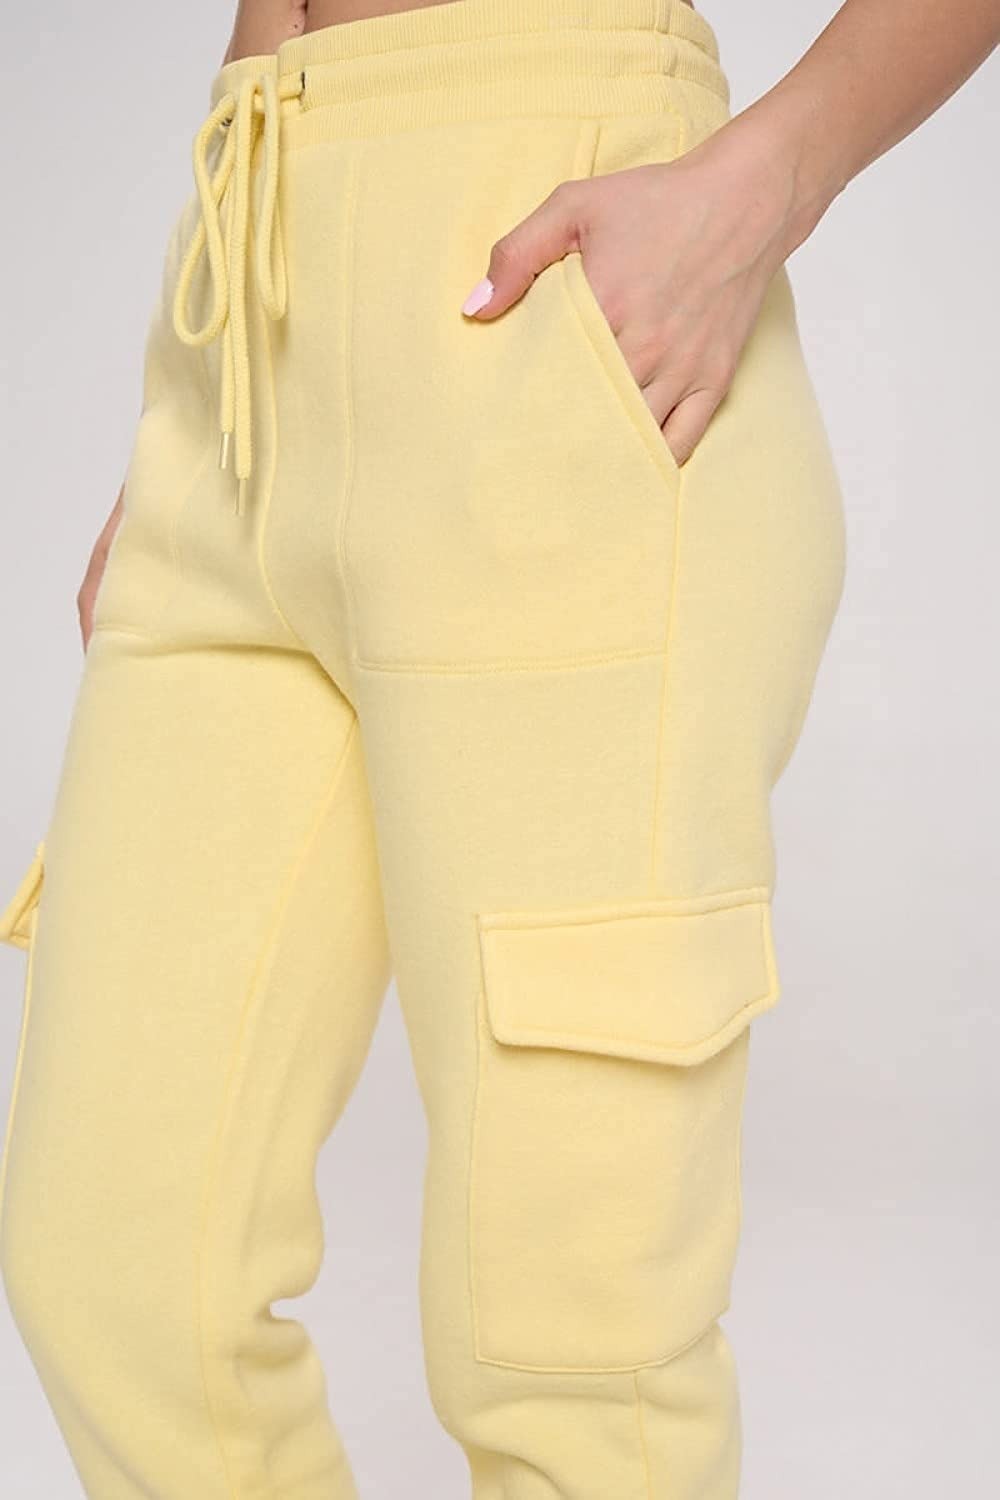 Women's French Terry Cargo Jogger Pants Elastic Drawstring Waistband Sweatpants Lounge Wear